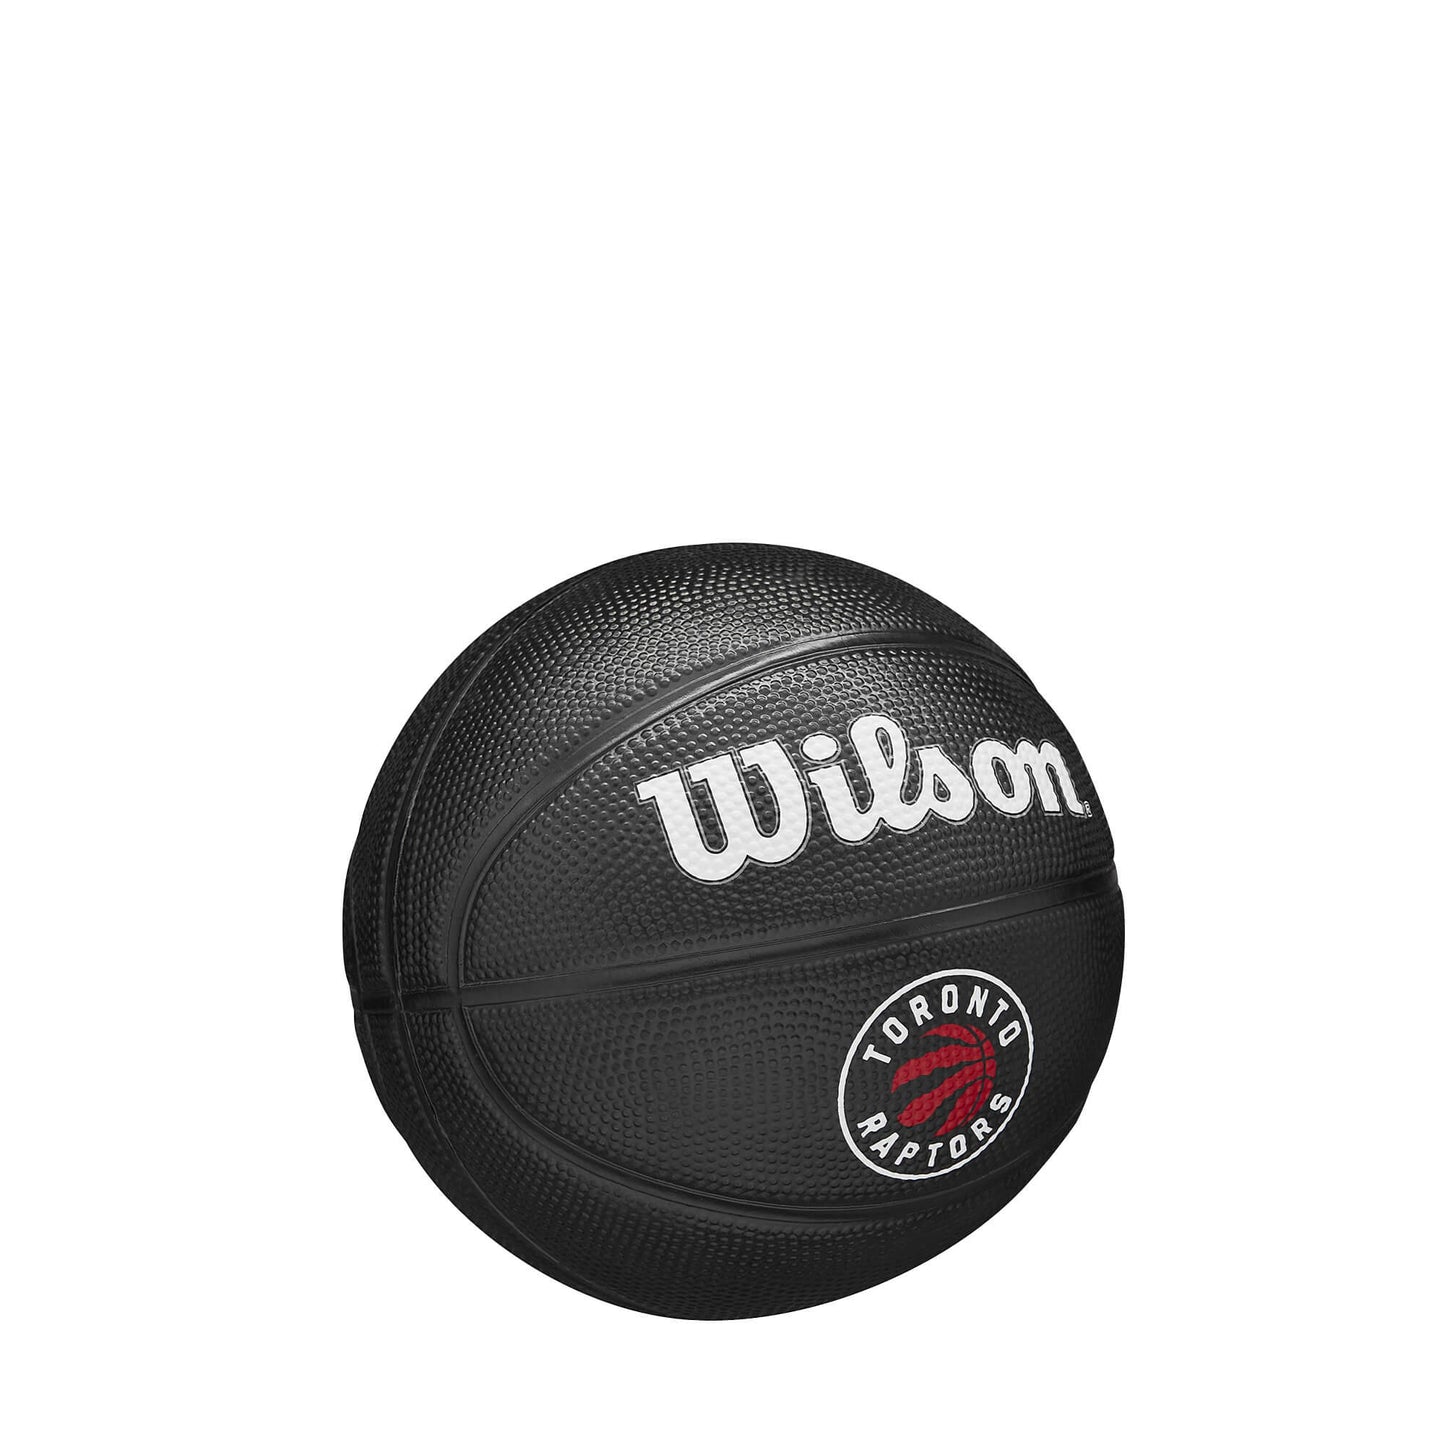 Wilson NBA Team Tribute mini Toronto Raptors - black (sz. 3)